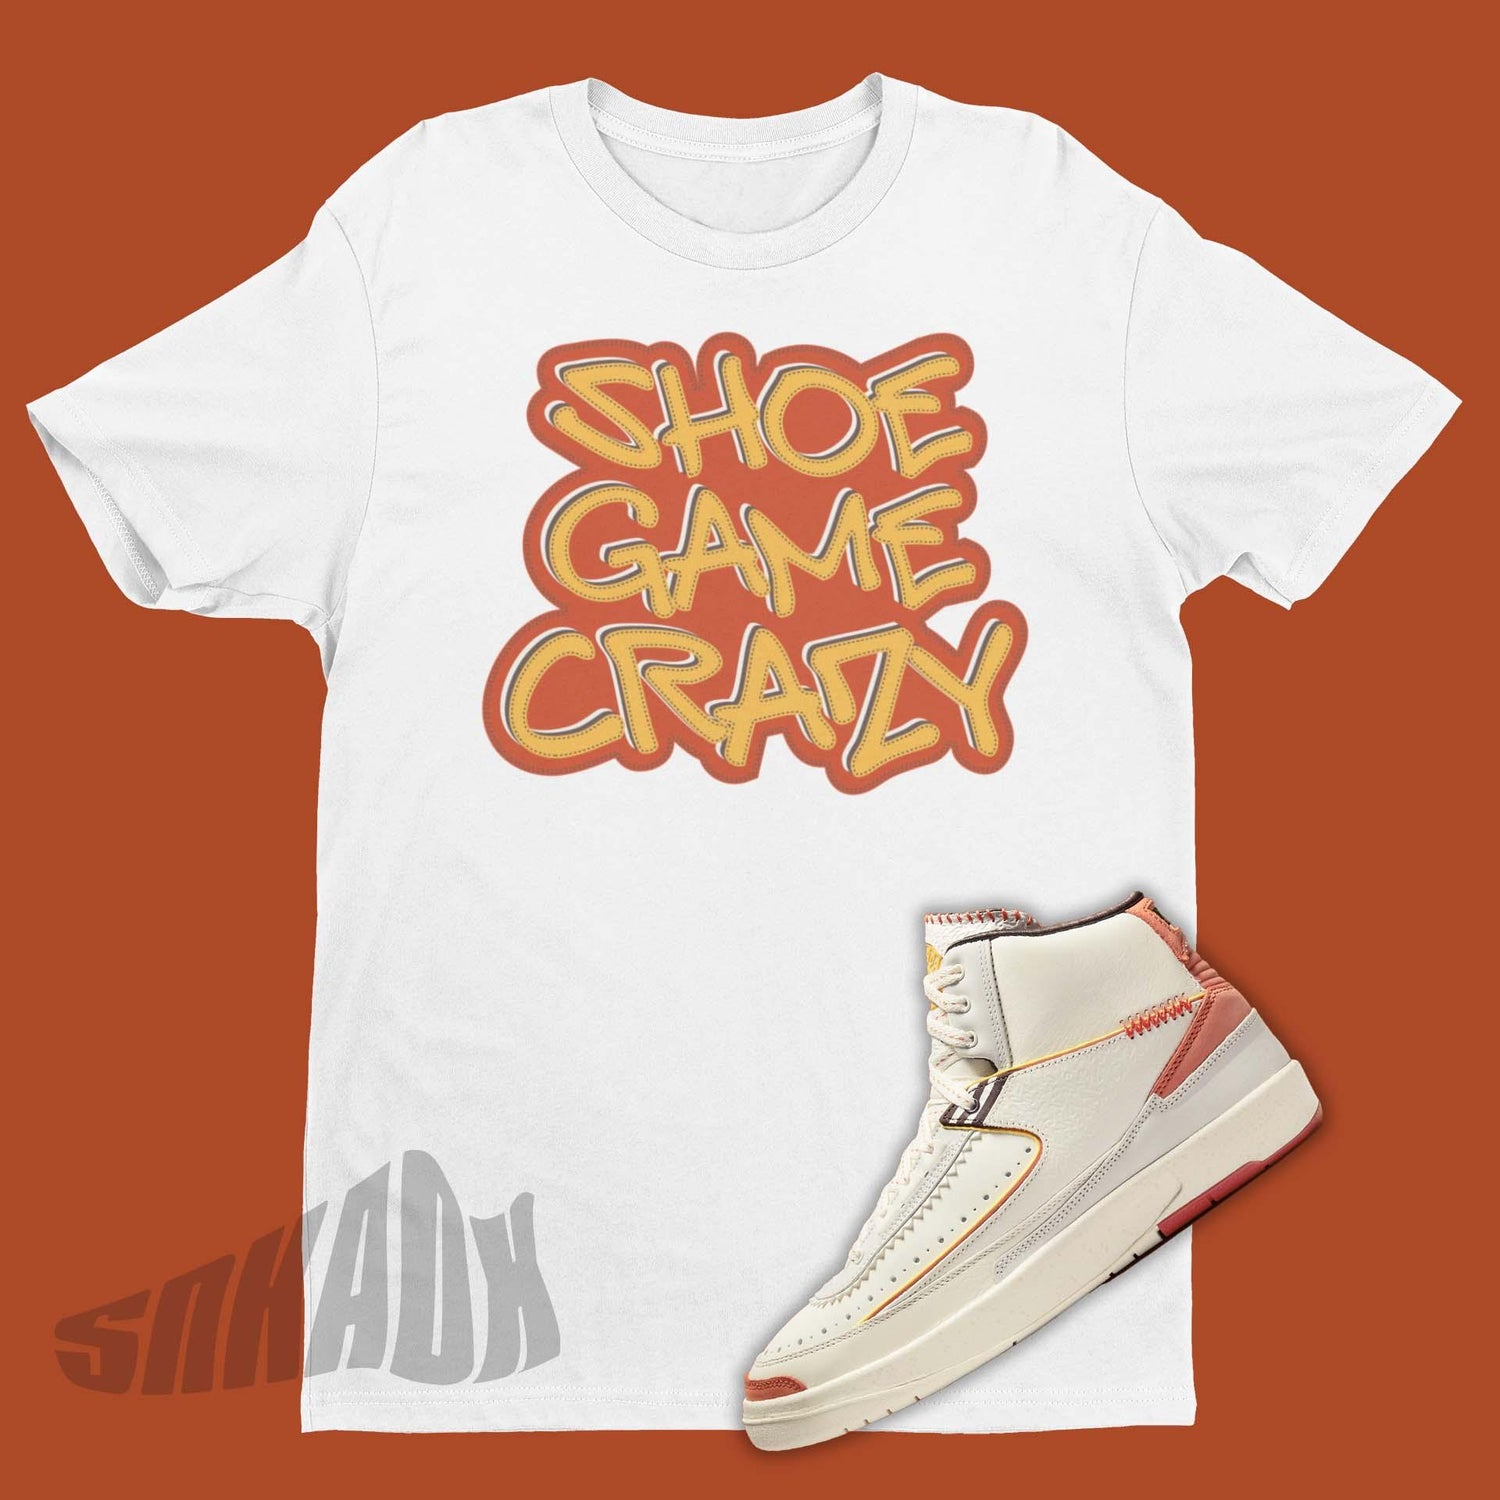 Shoe Game Crazy Shirt To Match Maison Chateau Rouge Air Jordan 2